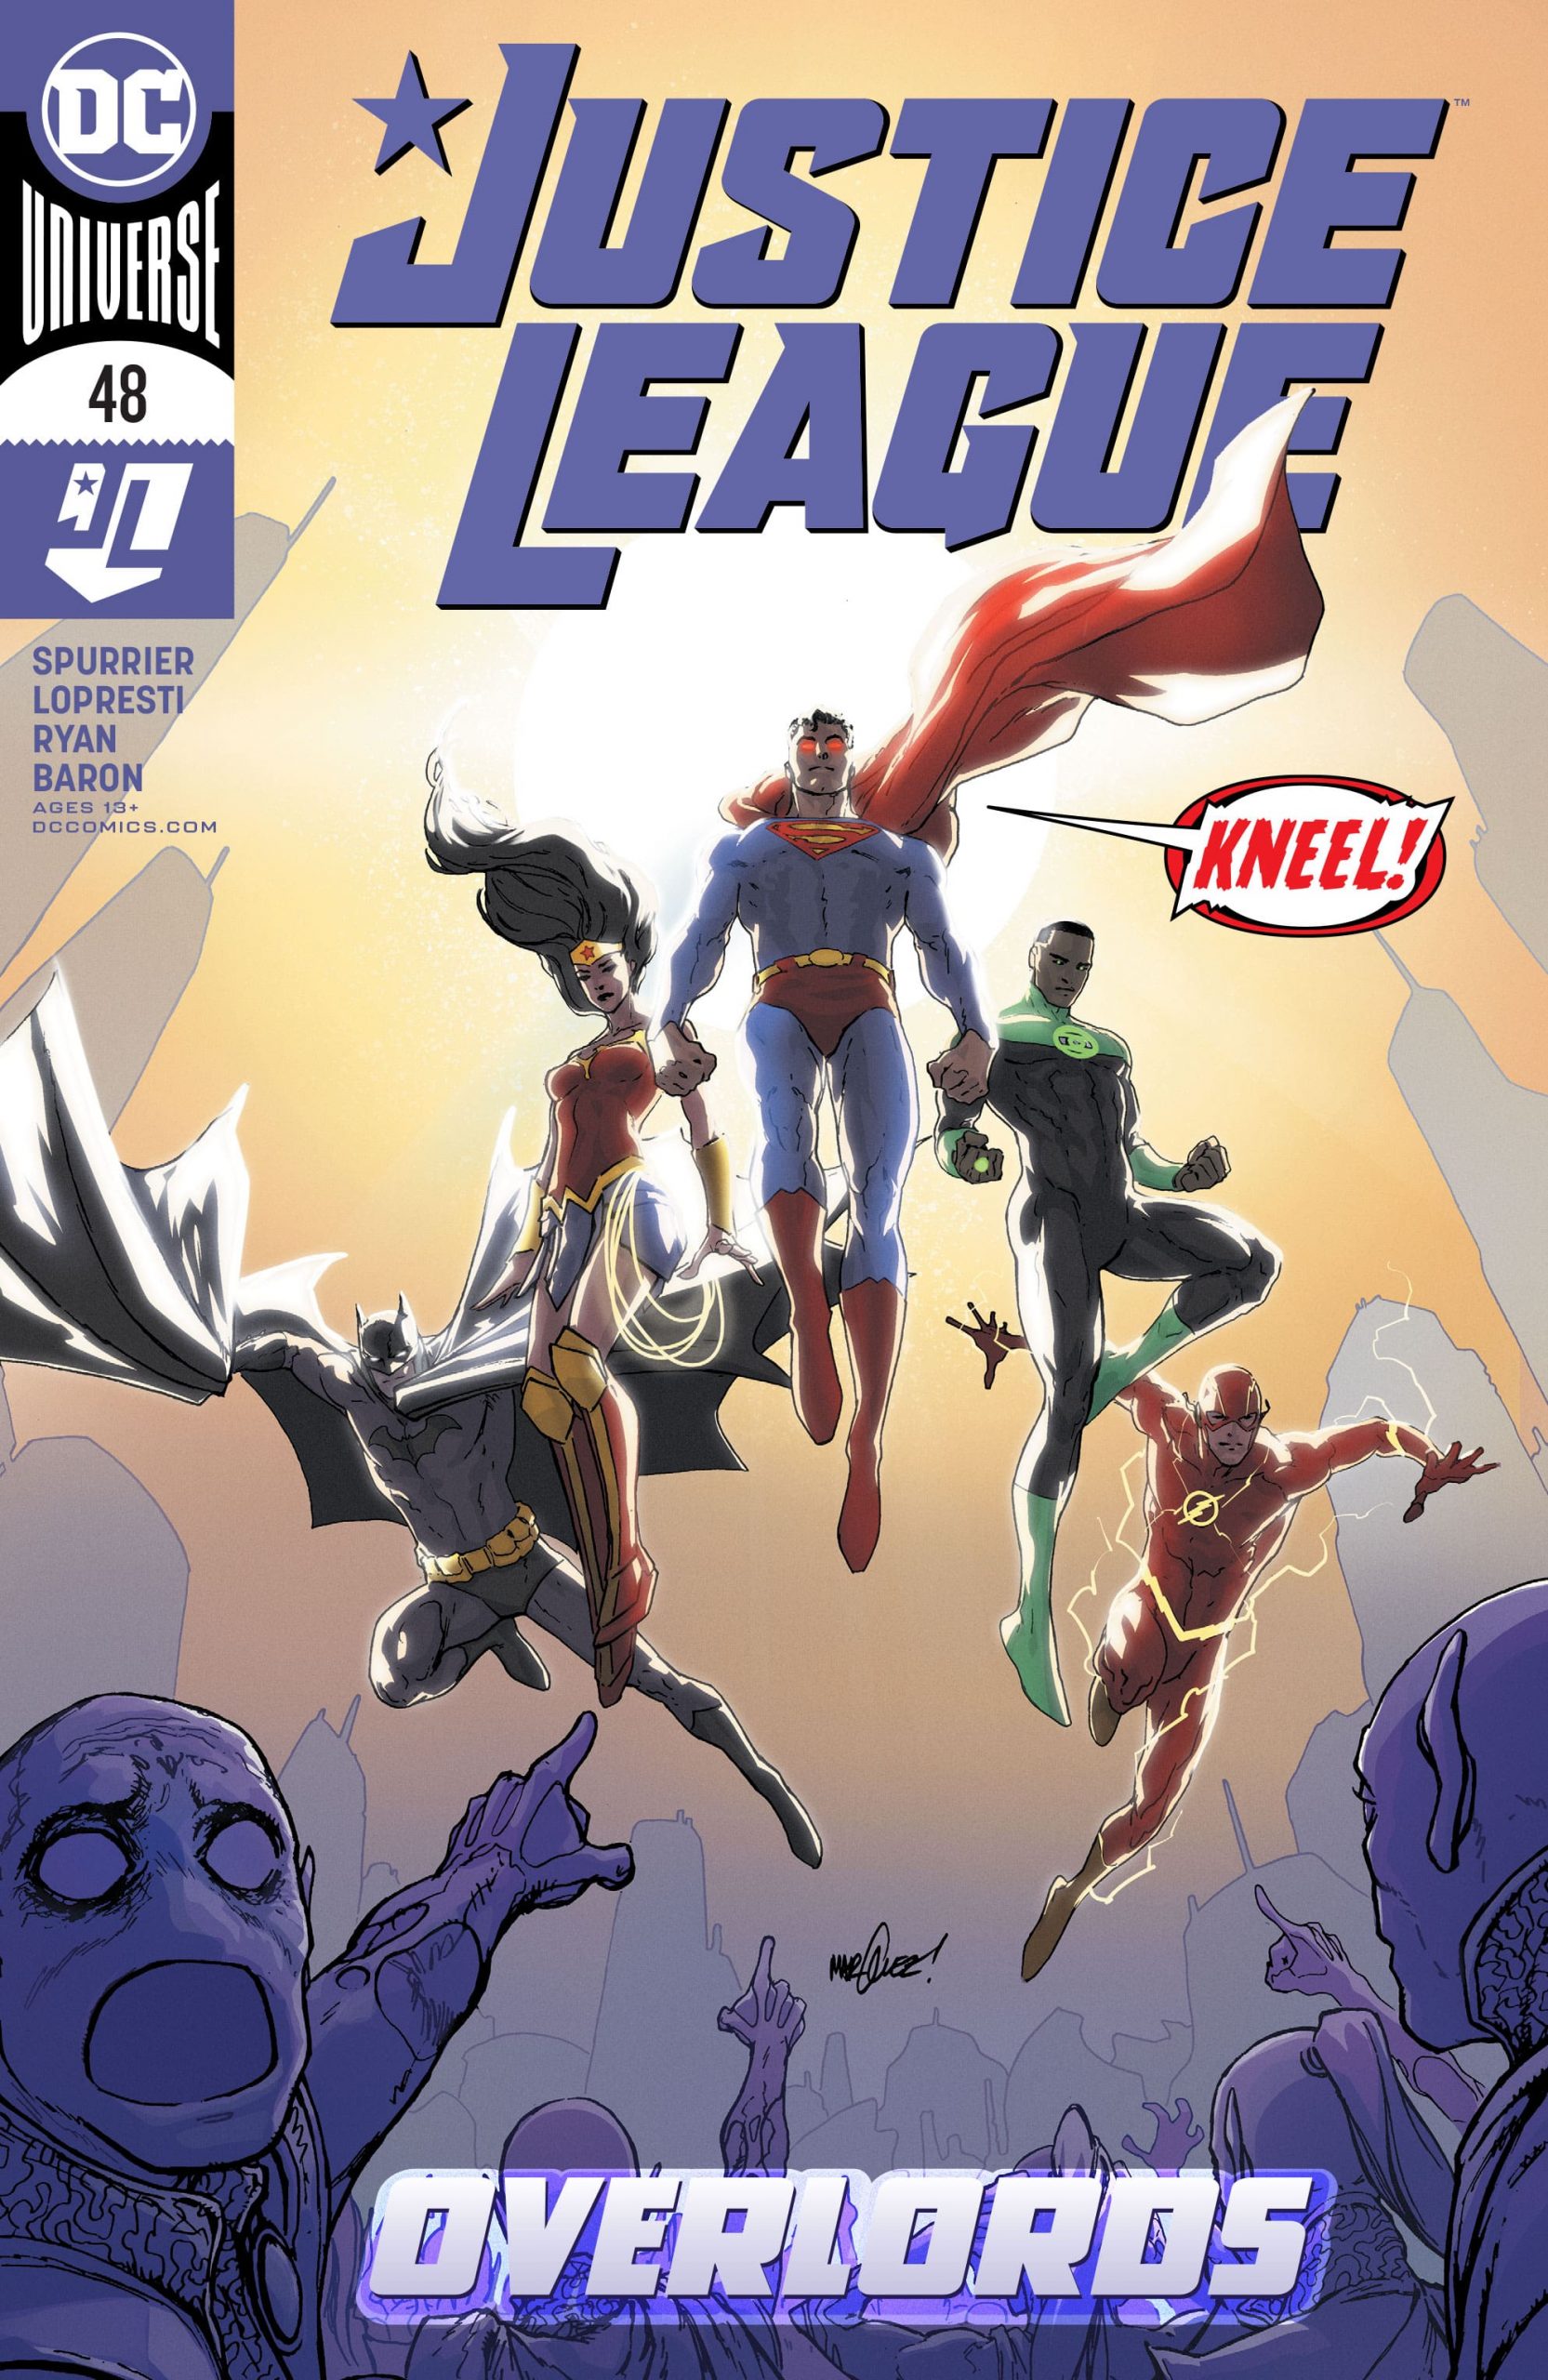 EXCLUSIVE DC Preview: Justice League #48